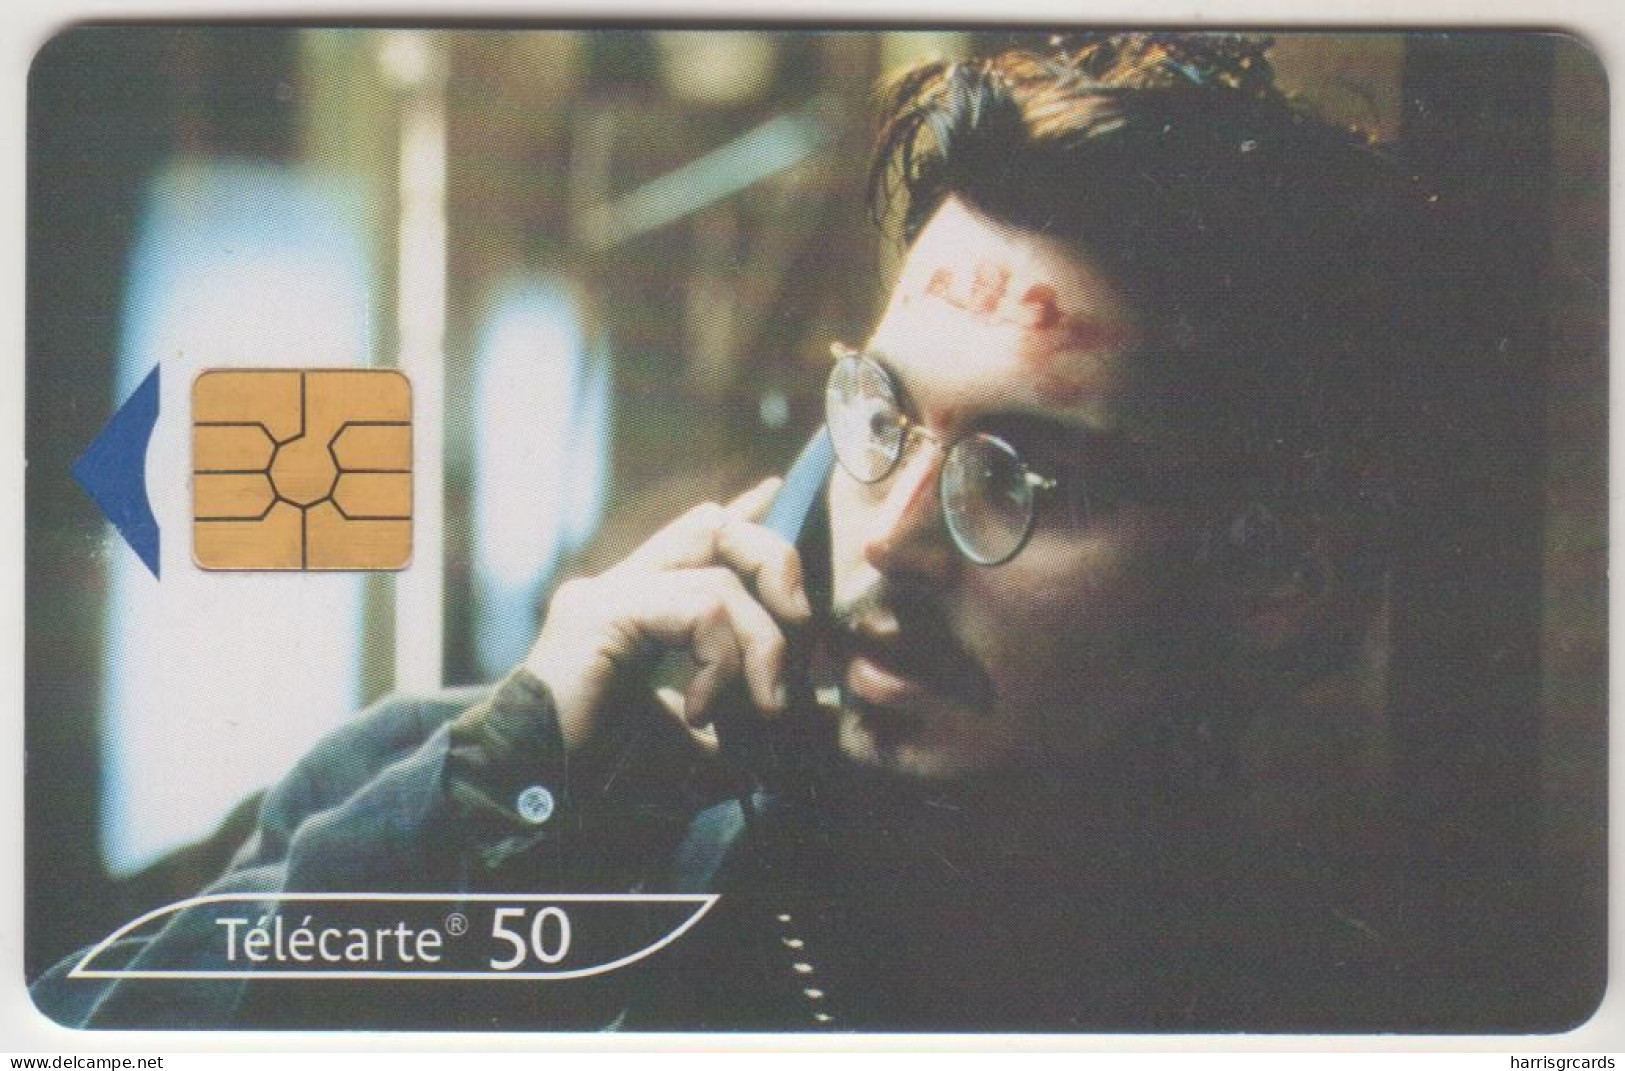 FRANCE - Telephone Et Cinema N.15 - Johnny Depp, Chip:GEM2 (Black/Grey), 50 U, 11/00, Used - 2000